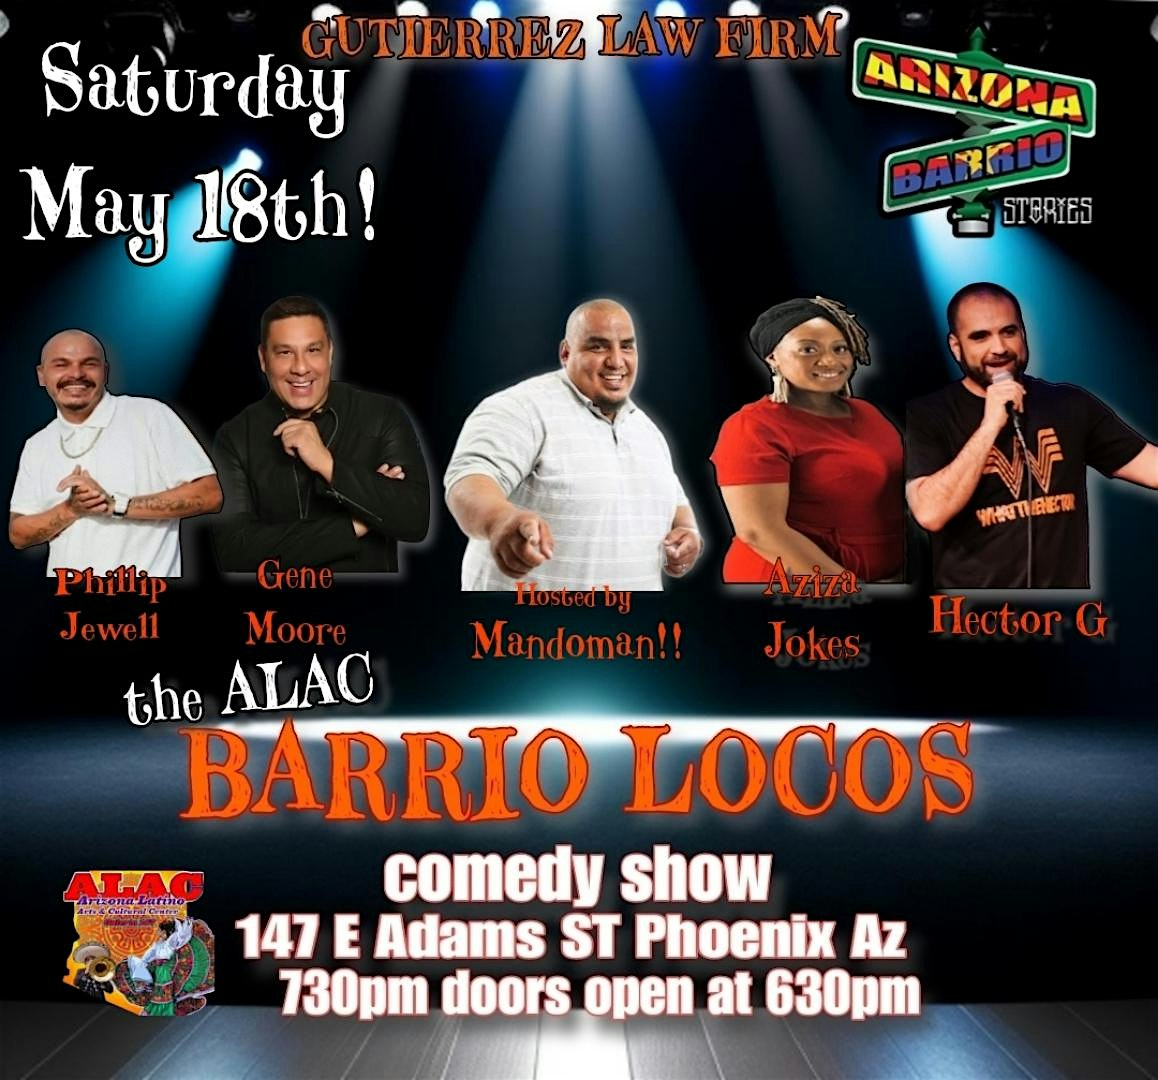 ALAC Barrio Locos Comedy Show, Presented by Guti\u00e9rrez Law Firm